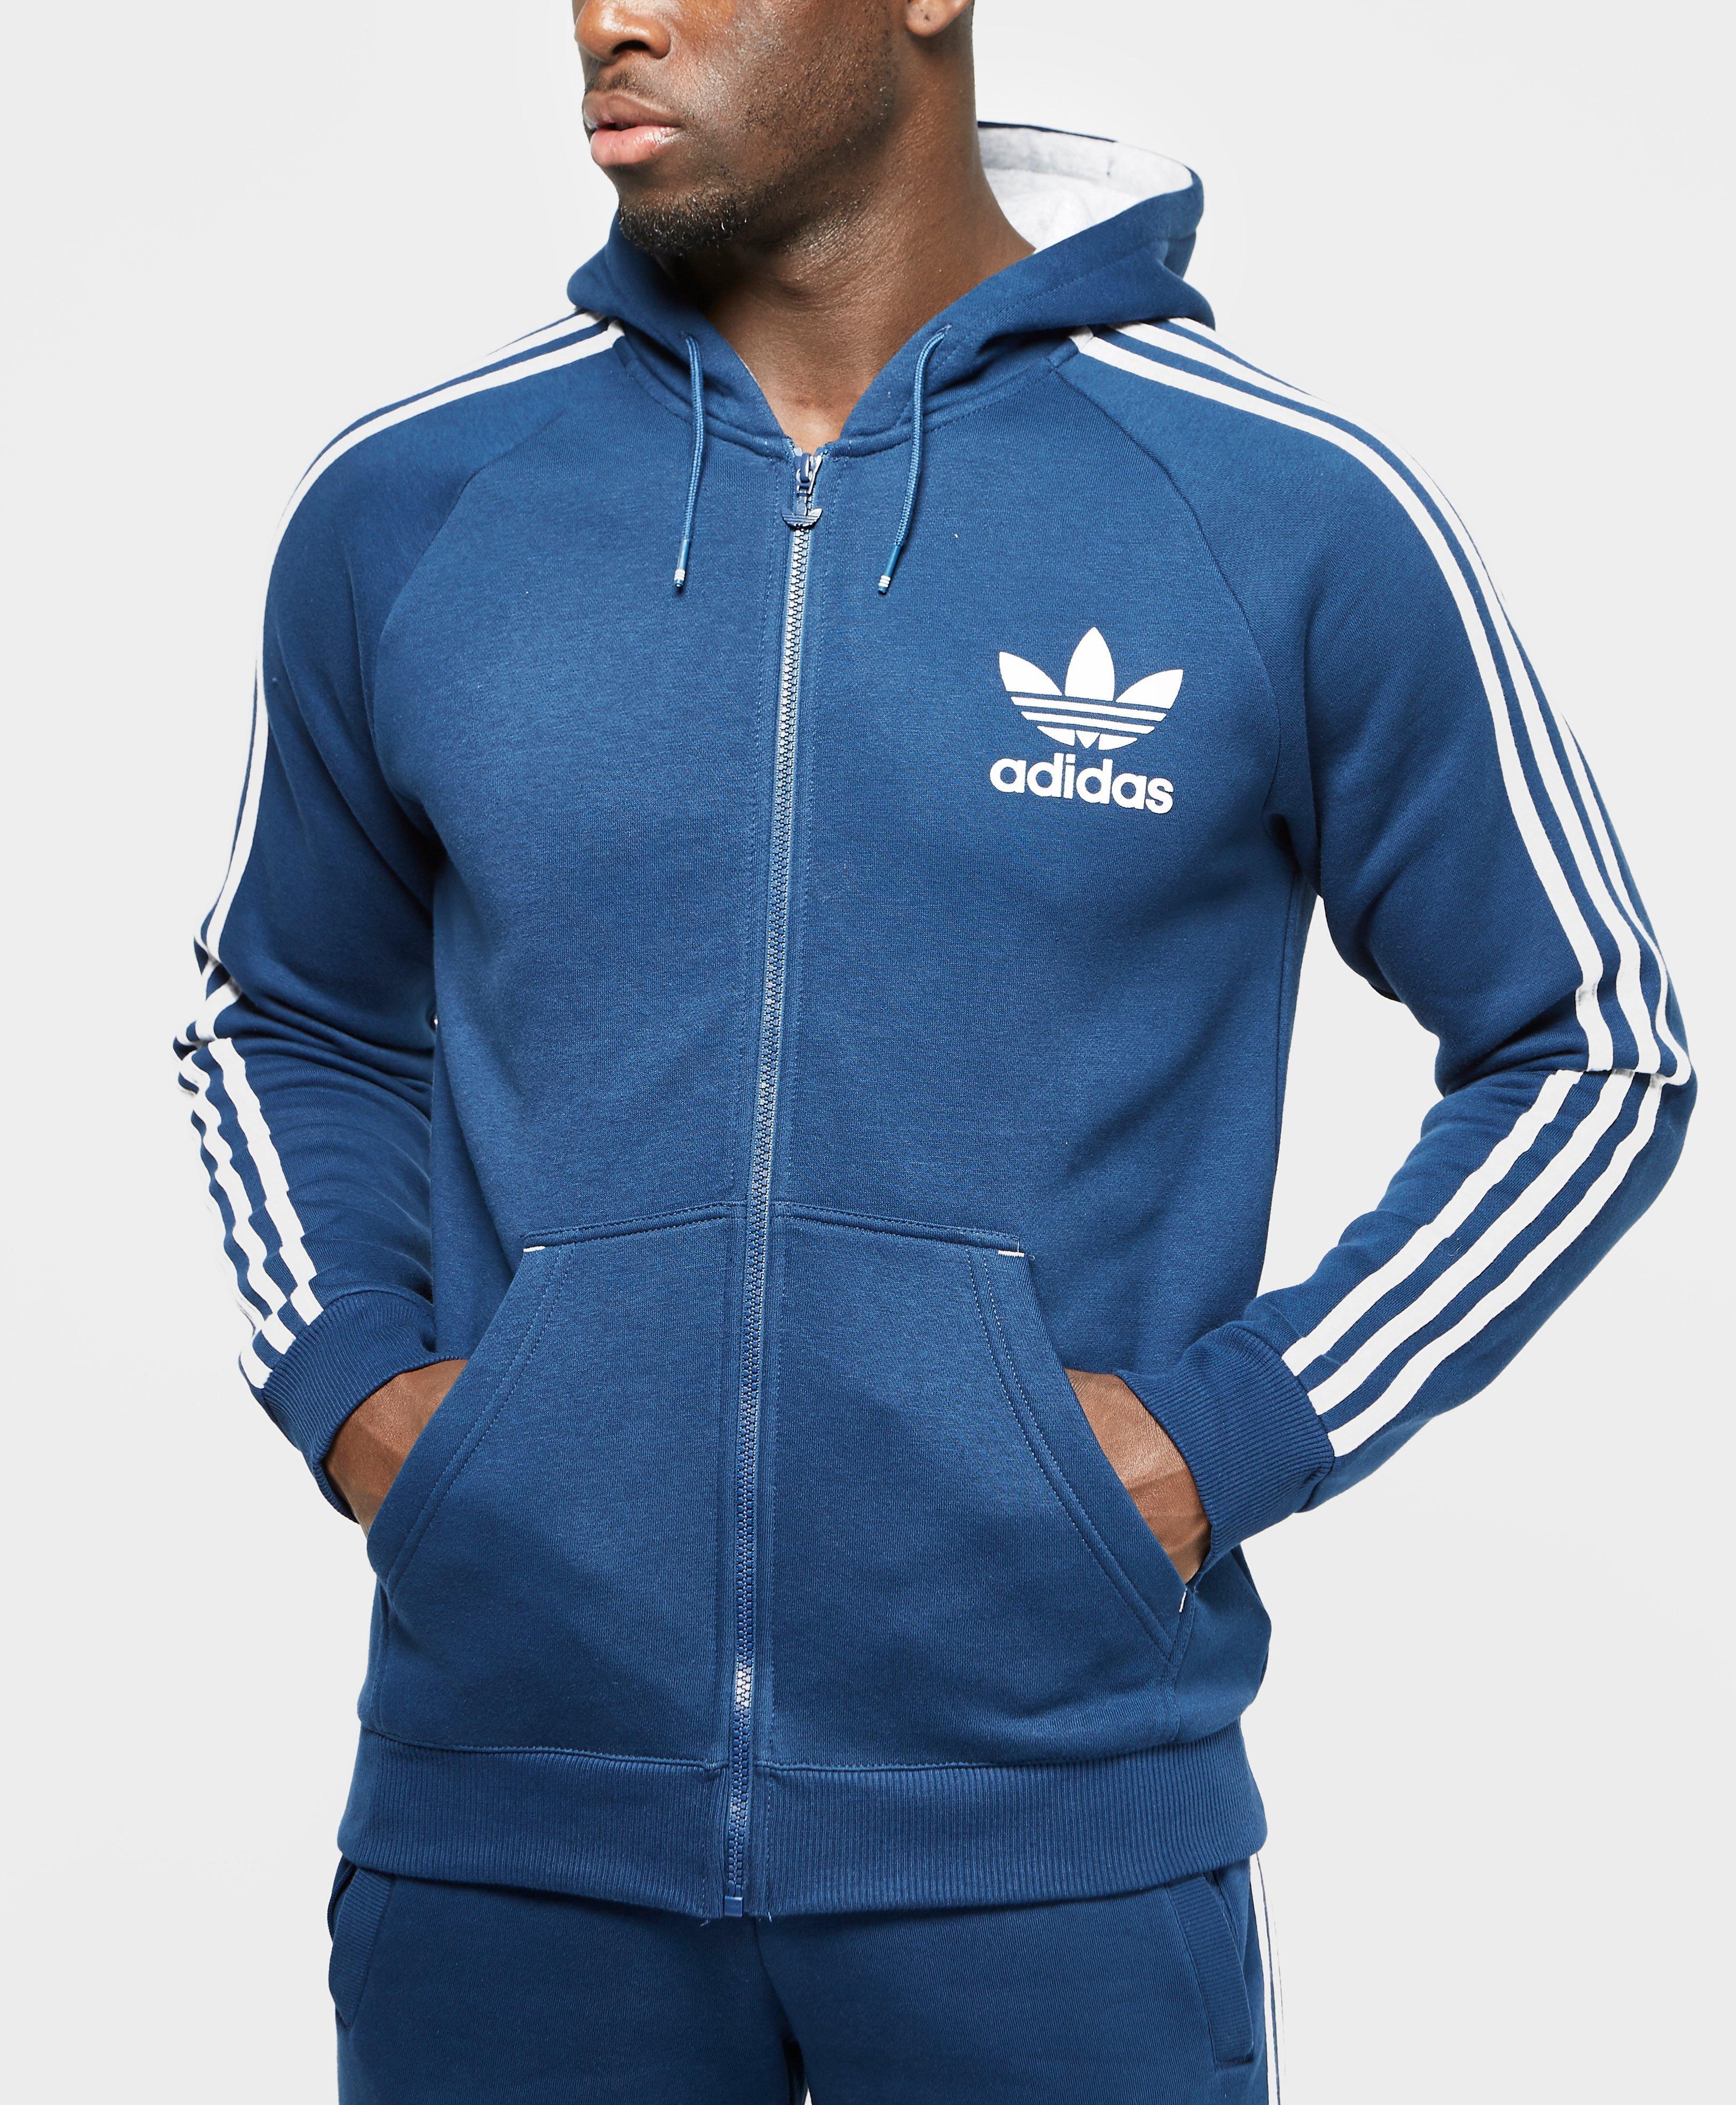 Lyst - Adidas Originals California Full Zip Hoody in Blue for Men